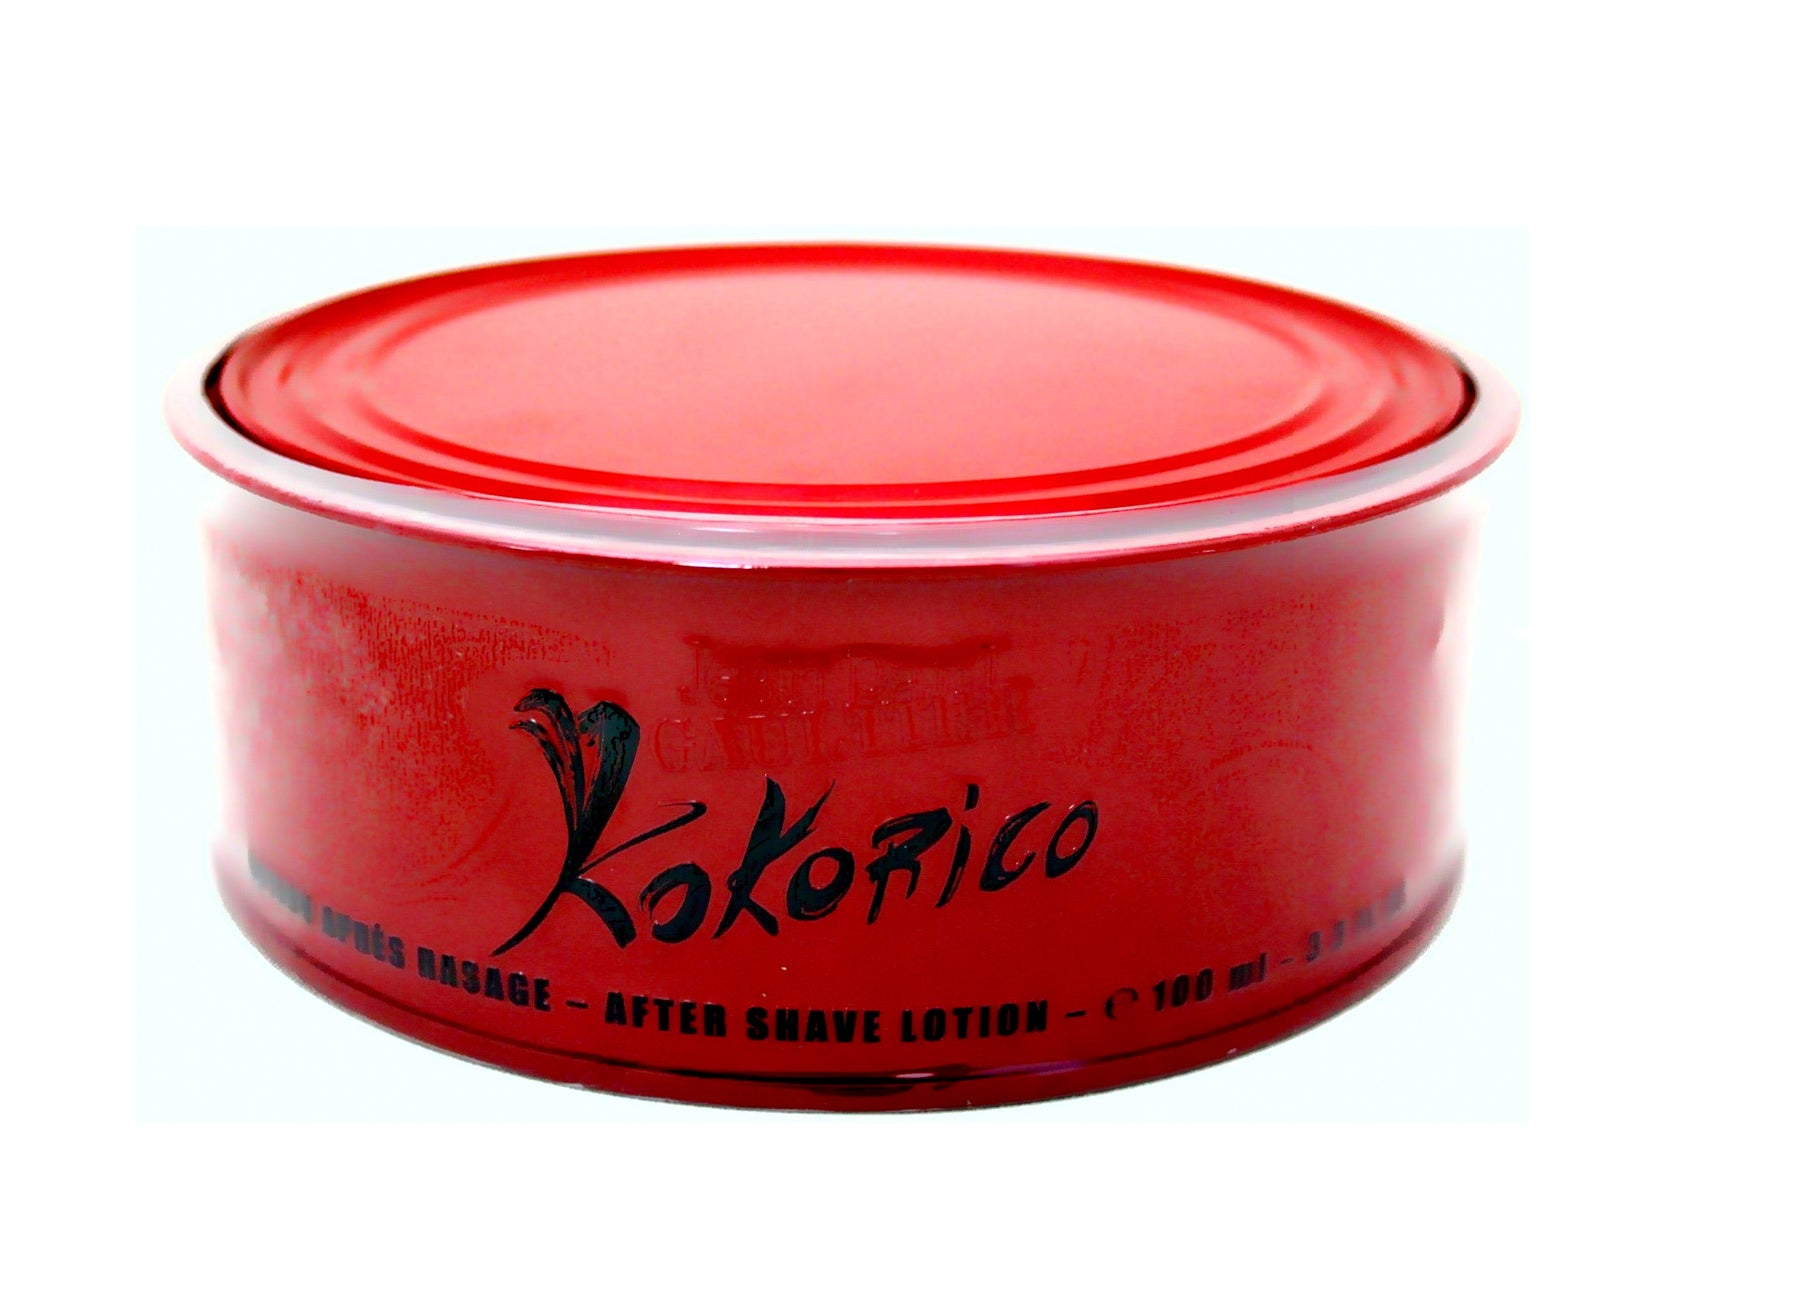 Jean Paul Gaultier Kokorico Aftershave Lotion 100 ml